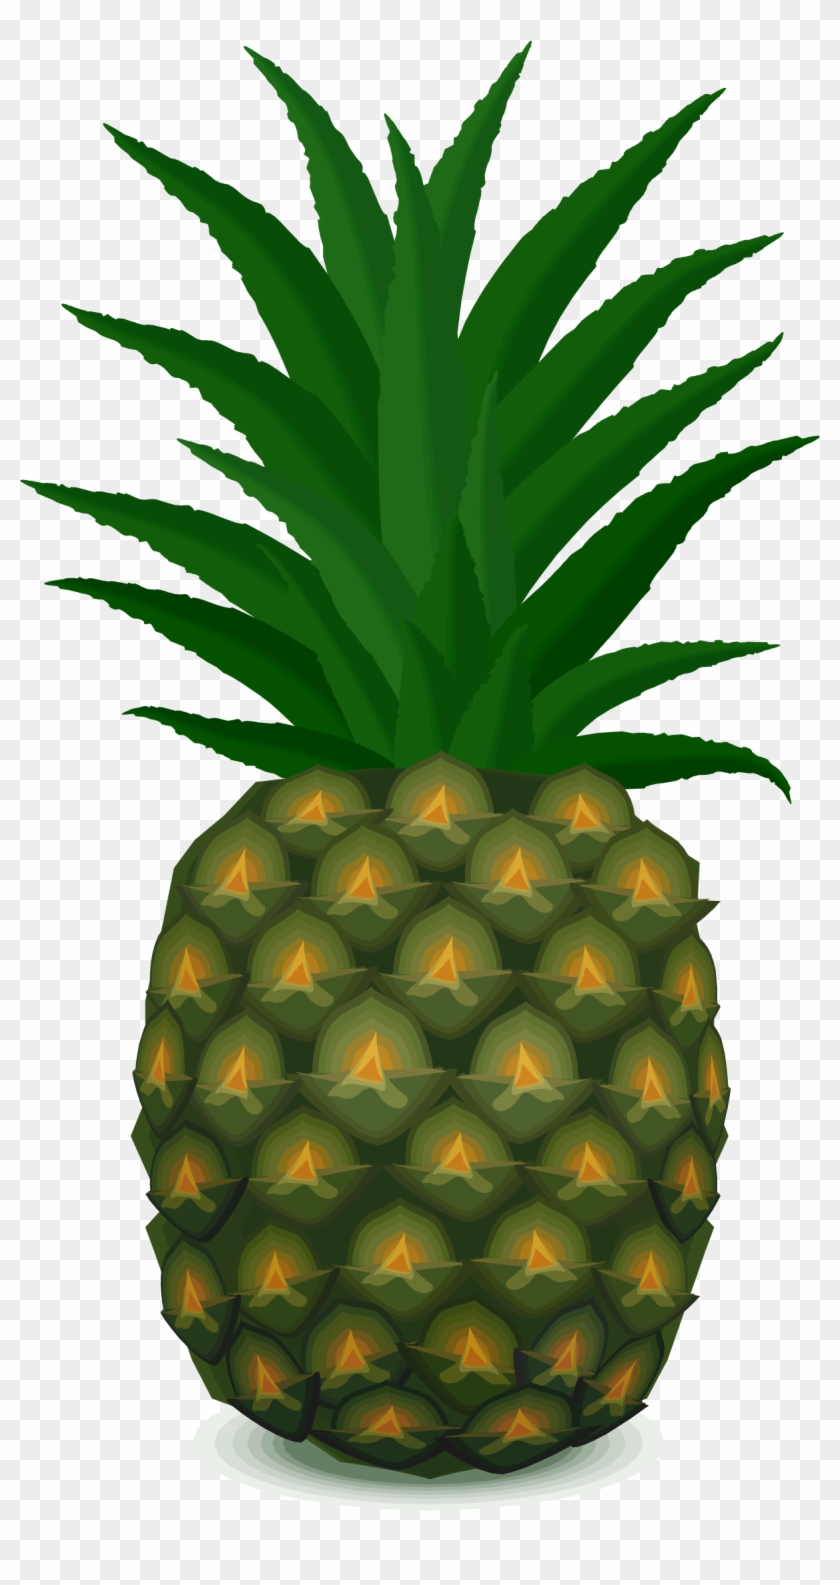 Heart Pineapple Throw Blanket (1199x2206) - Pineapple Favicon Clipart #3236271